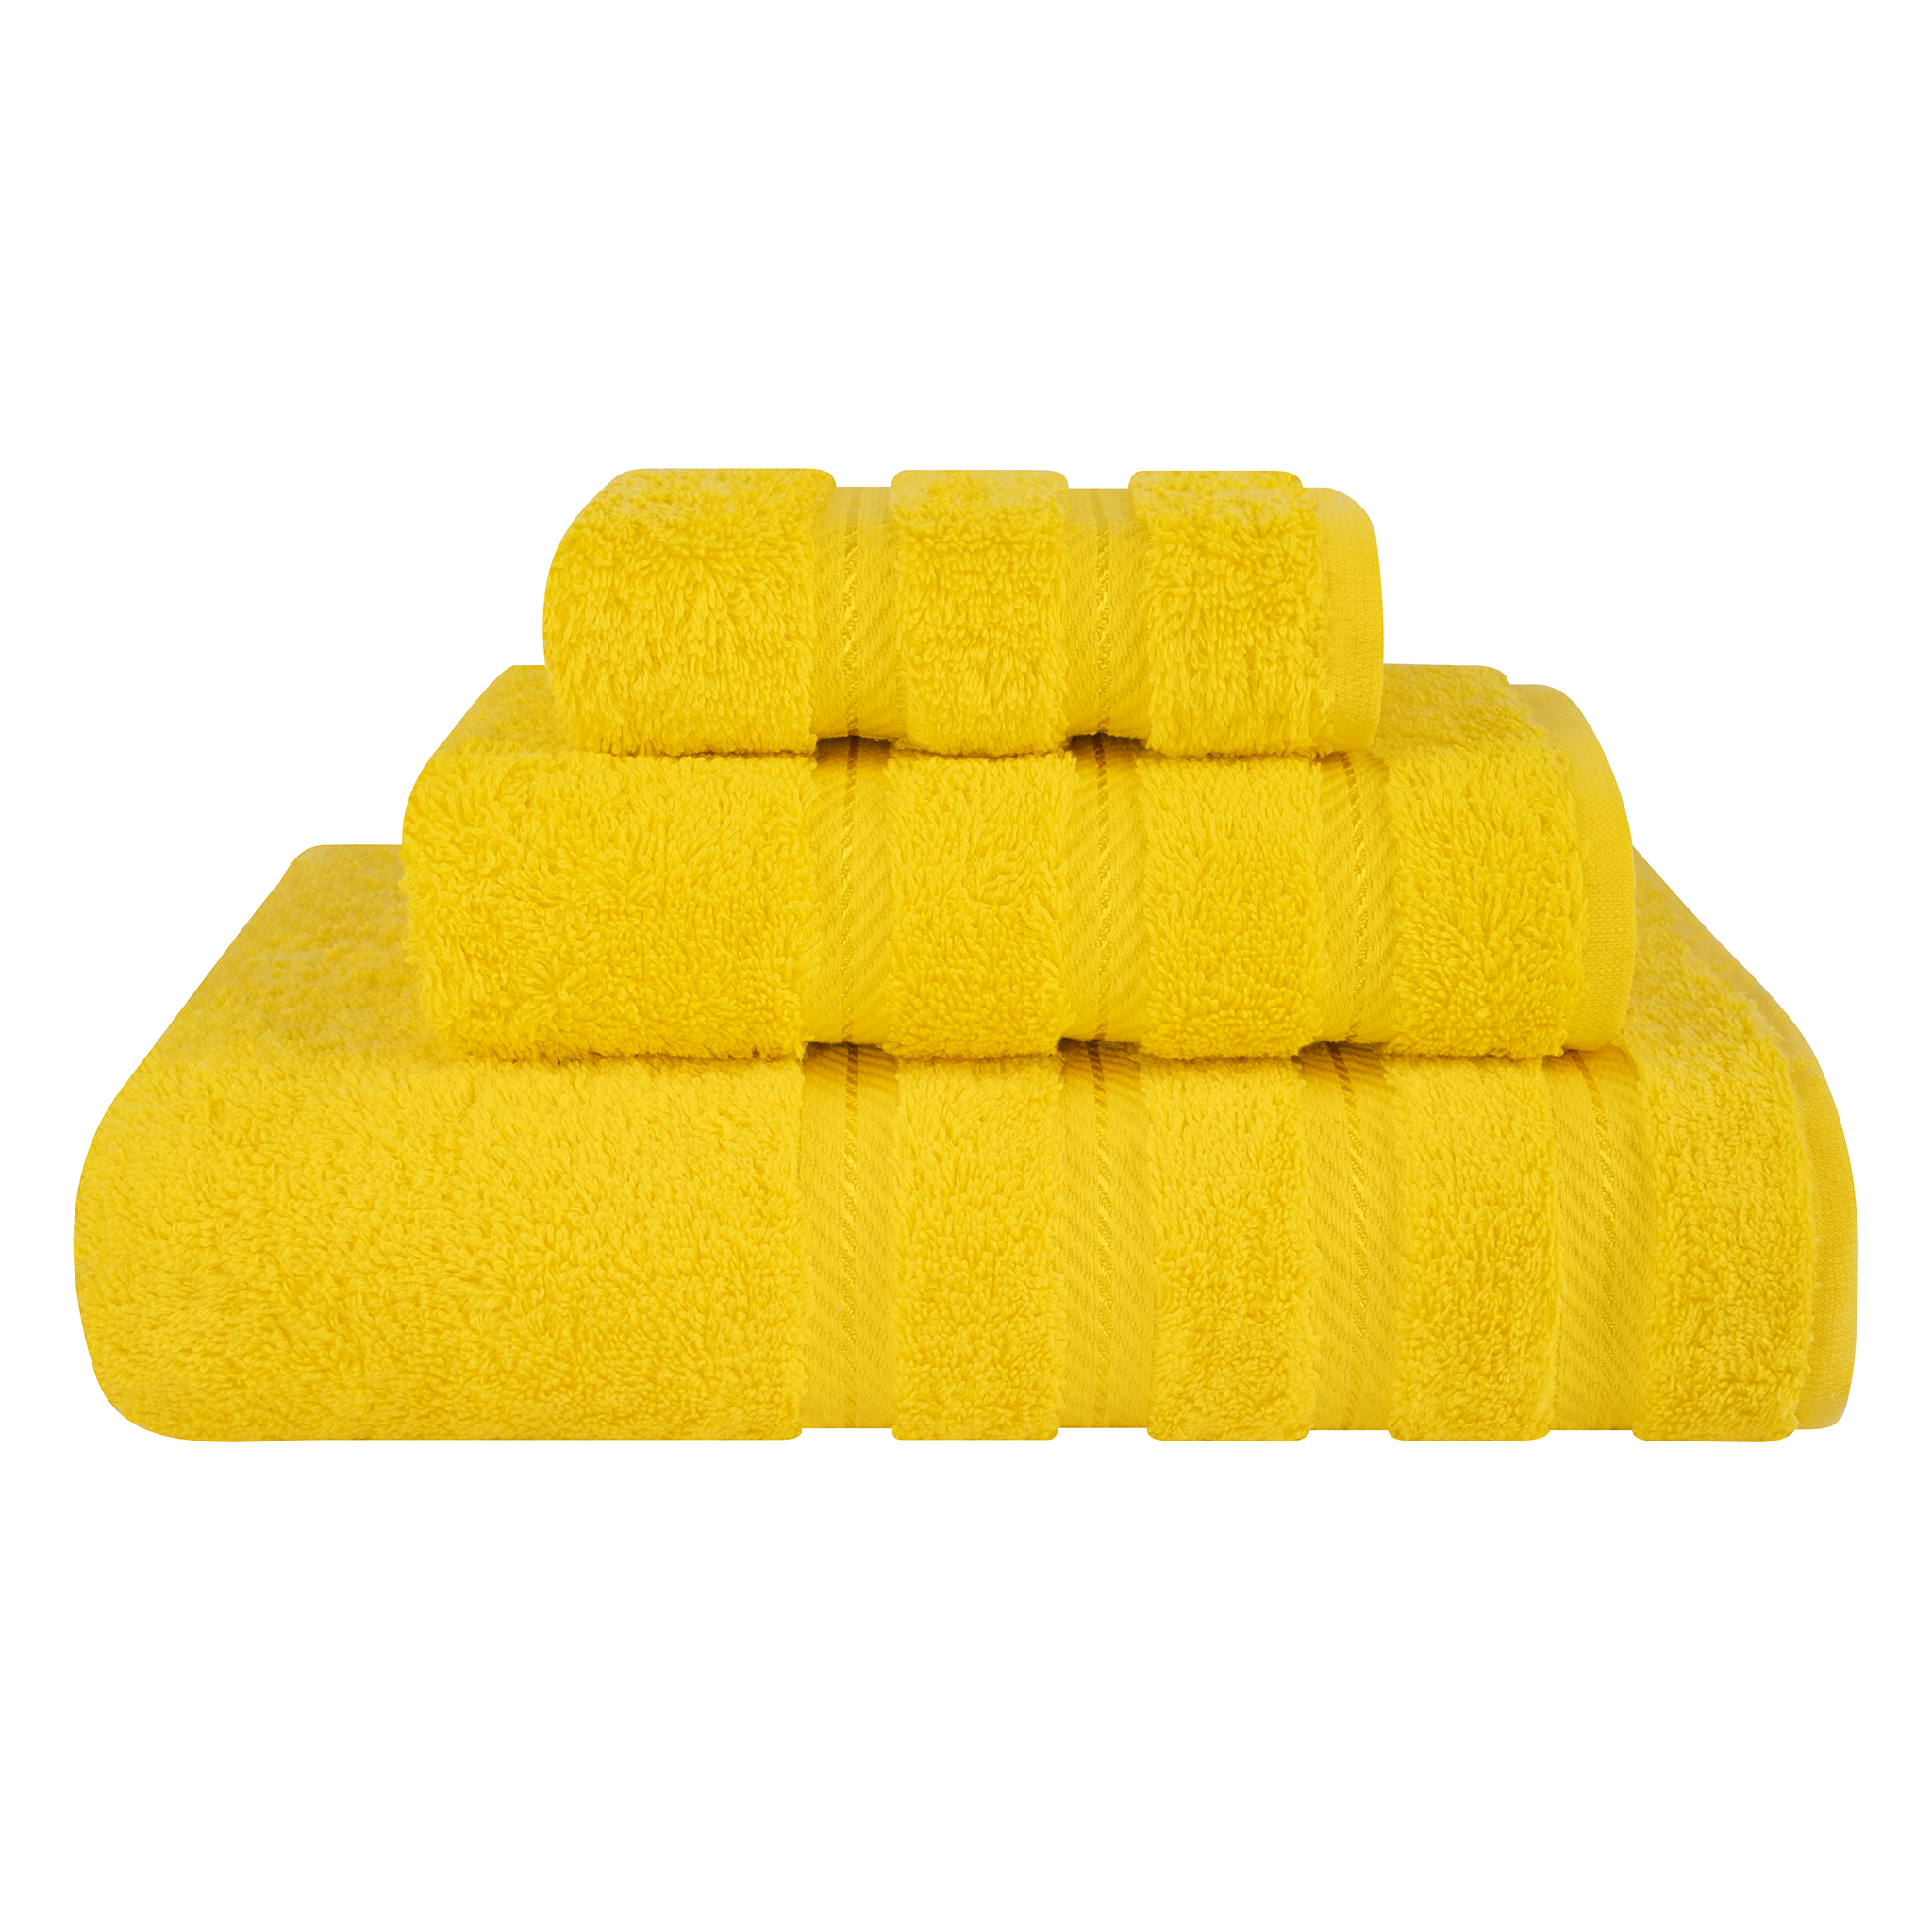 American Soft Linen - 3 Piece Turkish Cotton Towel Set - Yellow - 1